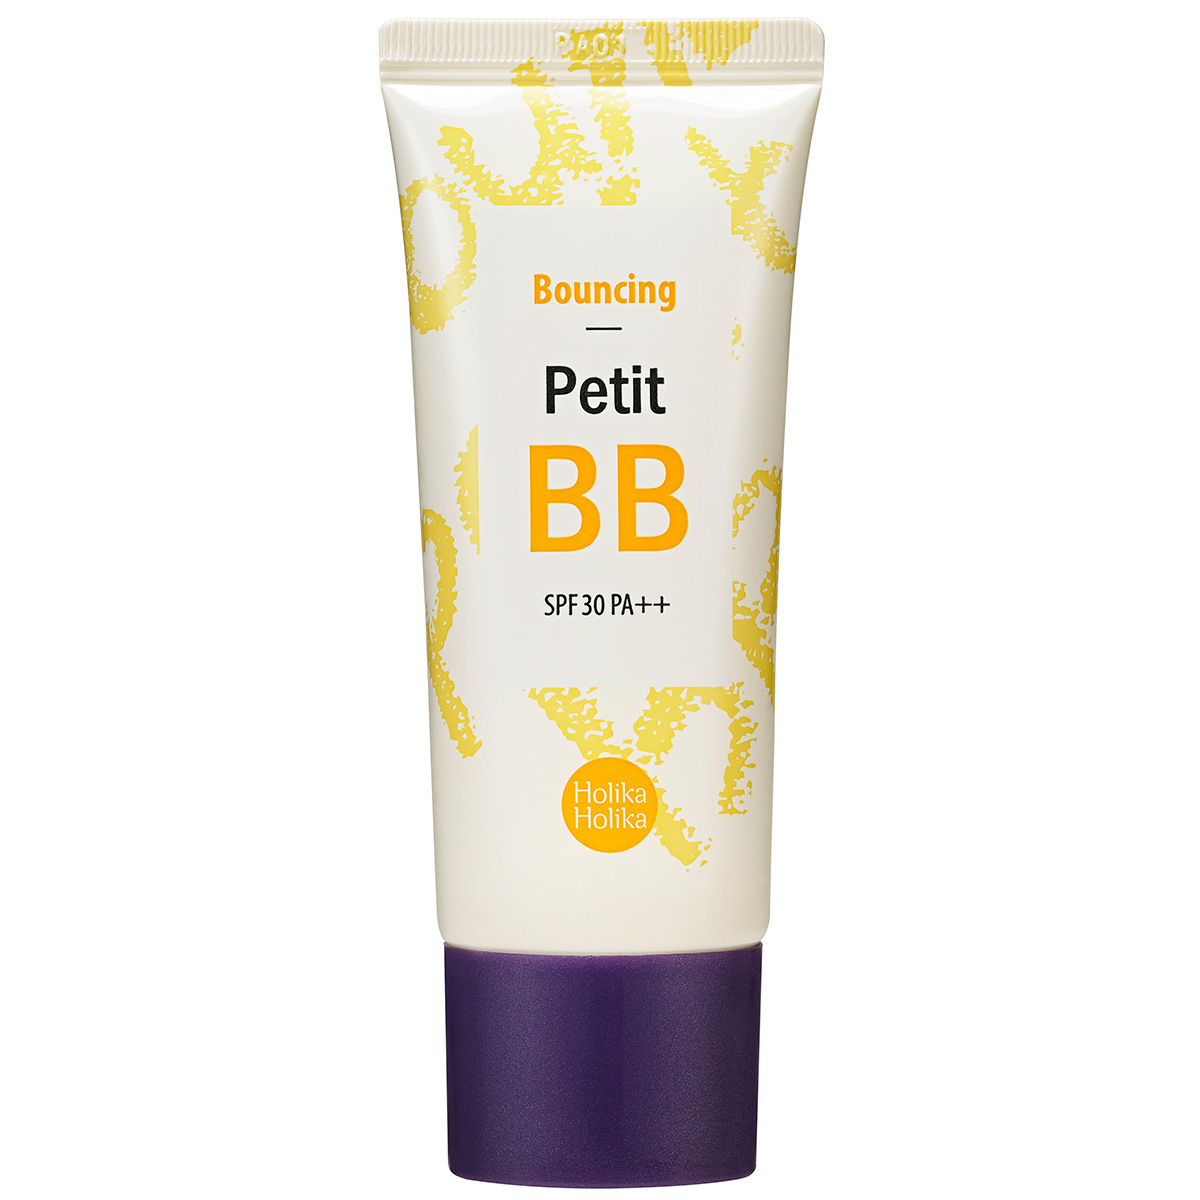 Bouncing Petit BB Cream, 30 ml Holika Holika BB Cream